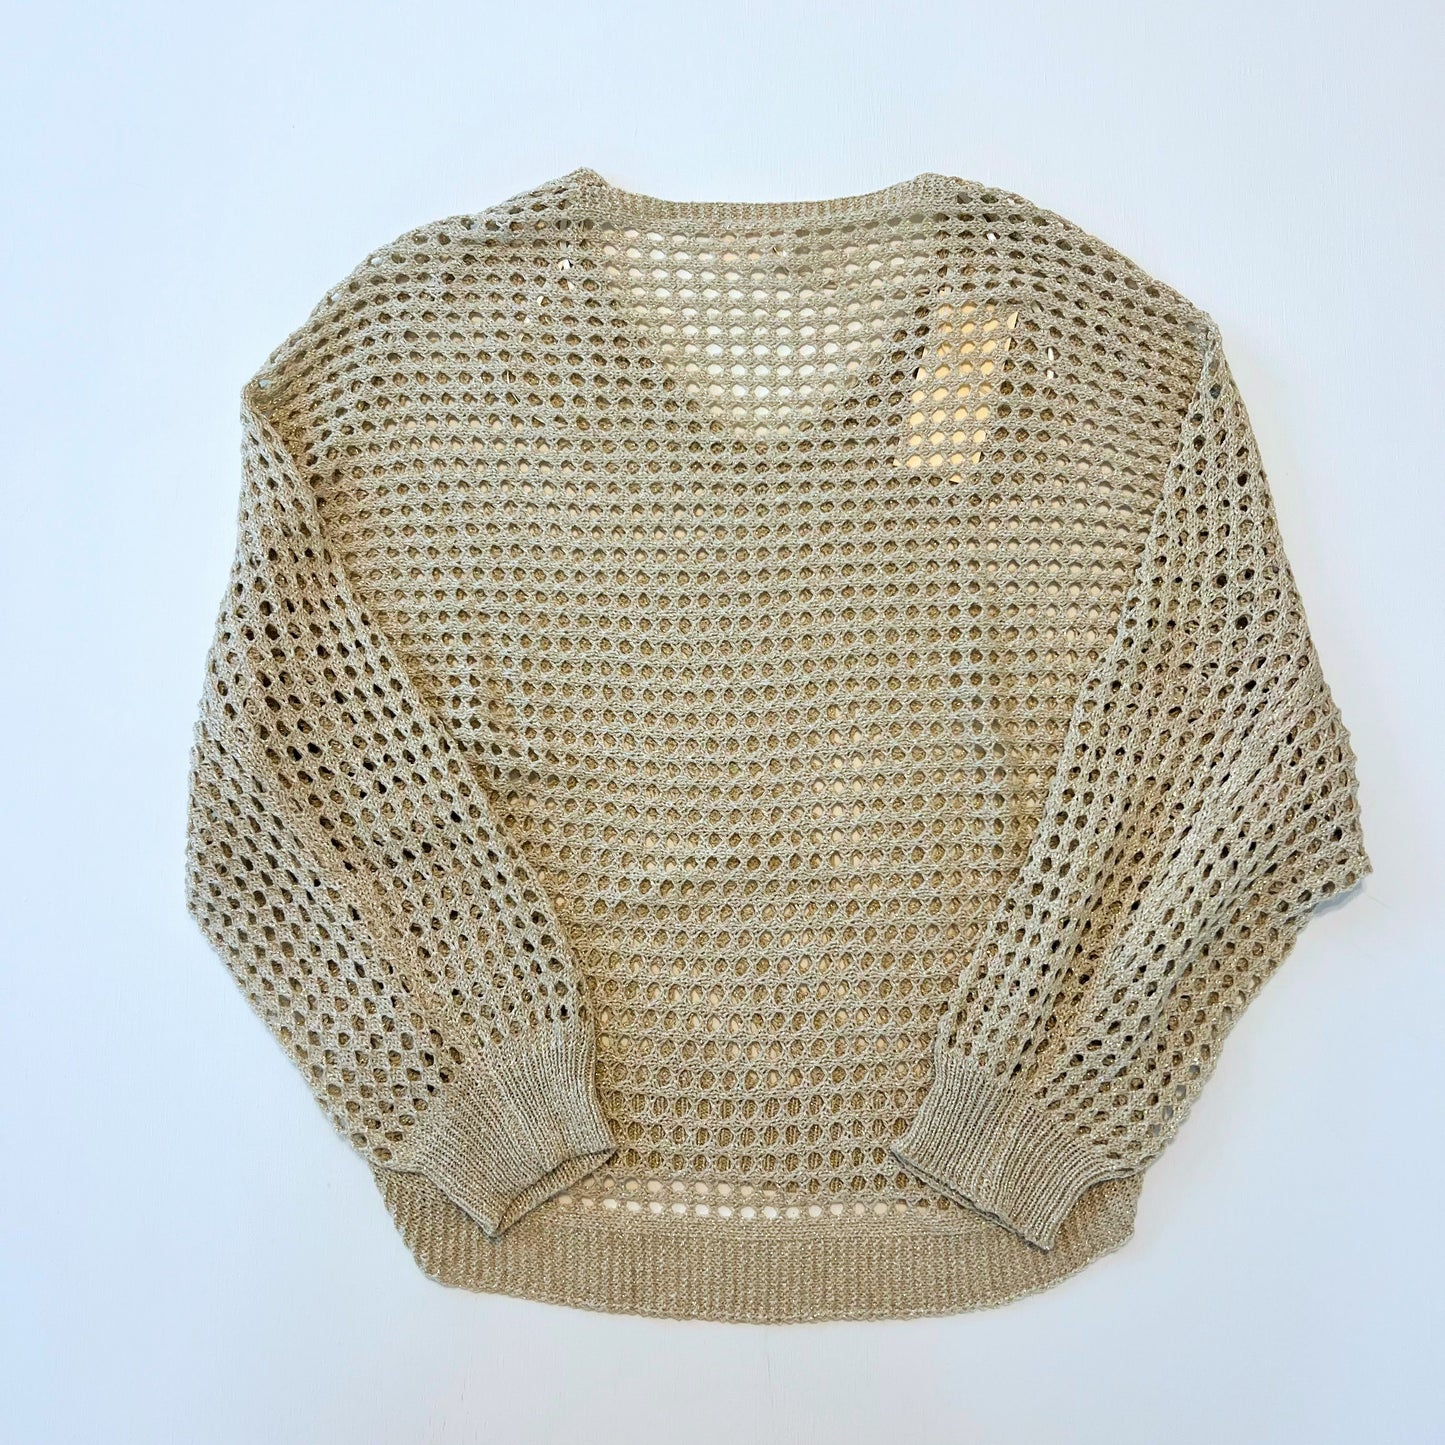 Hillman Knit Metallic Sweater